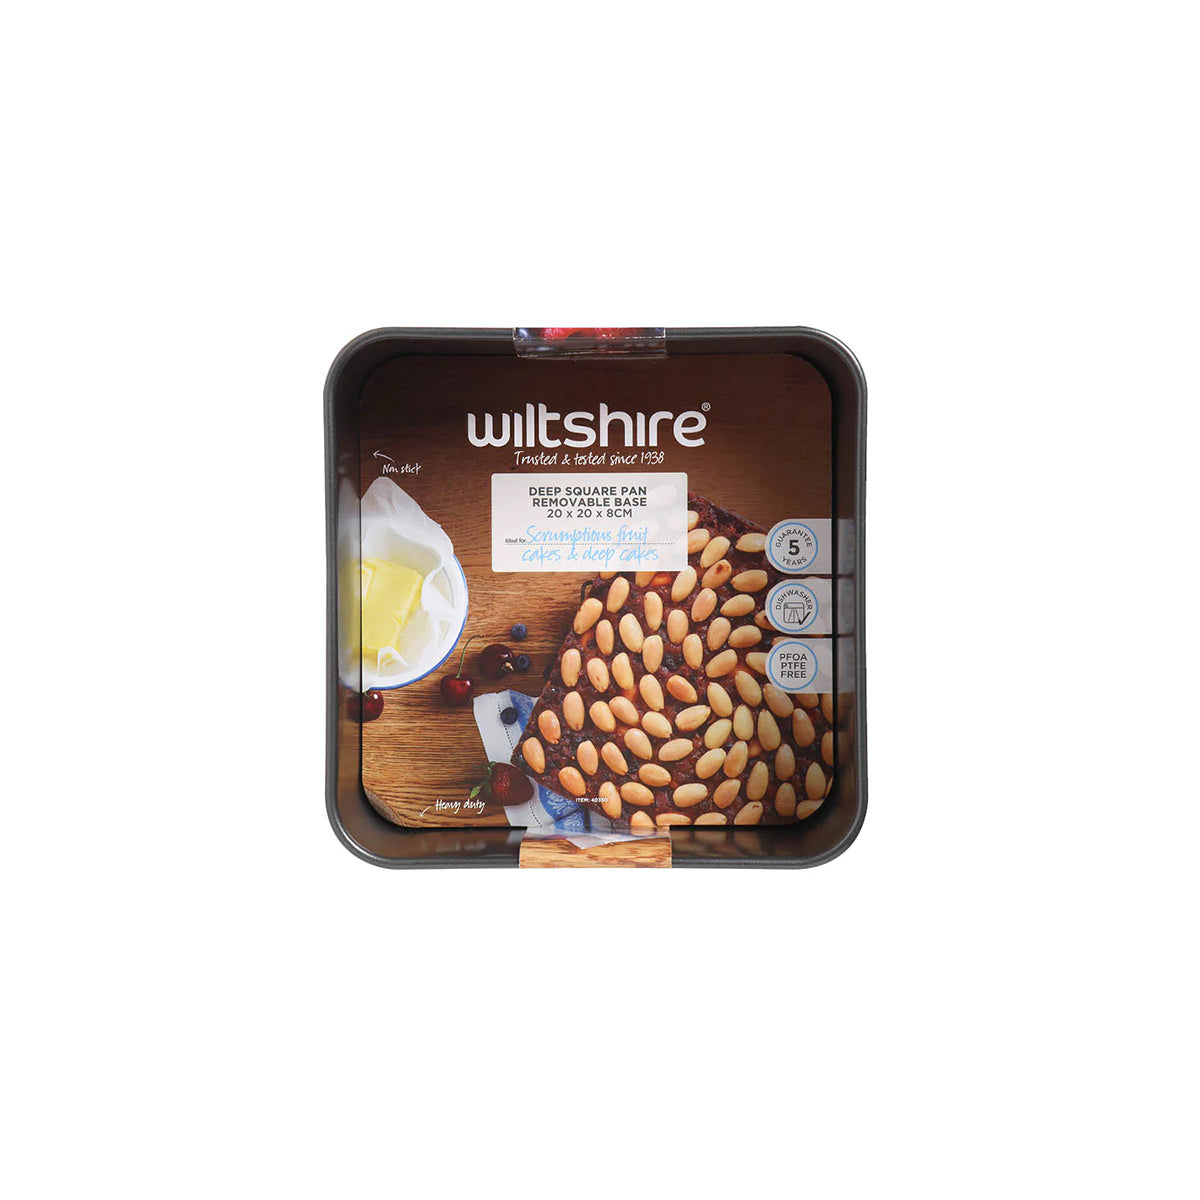 WLT40350 Wiltshire Loose Base Square Cake Pan 250mm Tomkin Australia Hospitality Supplies